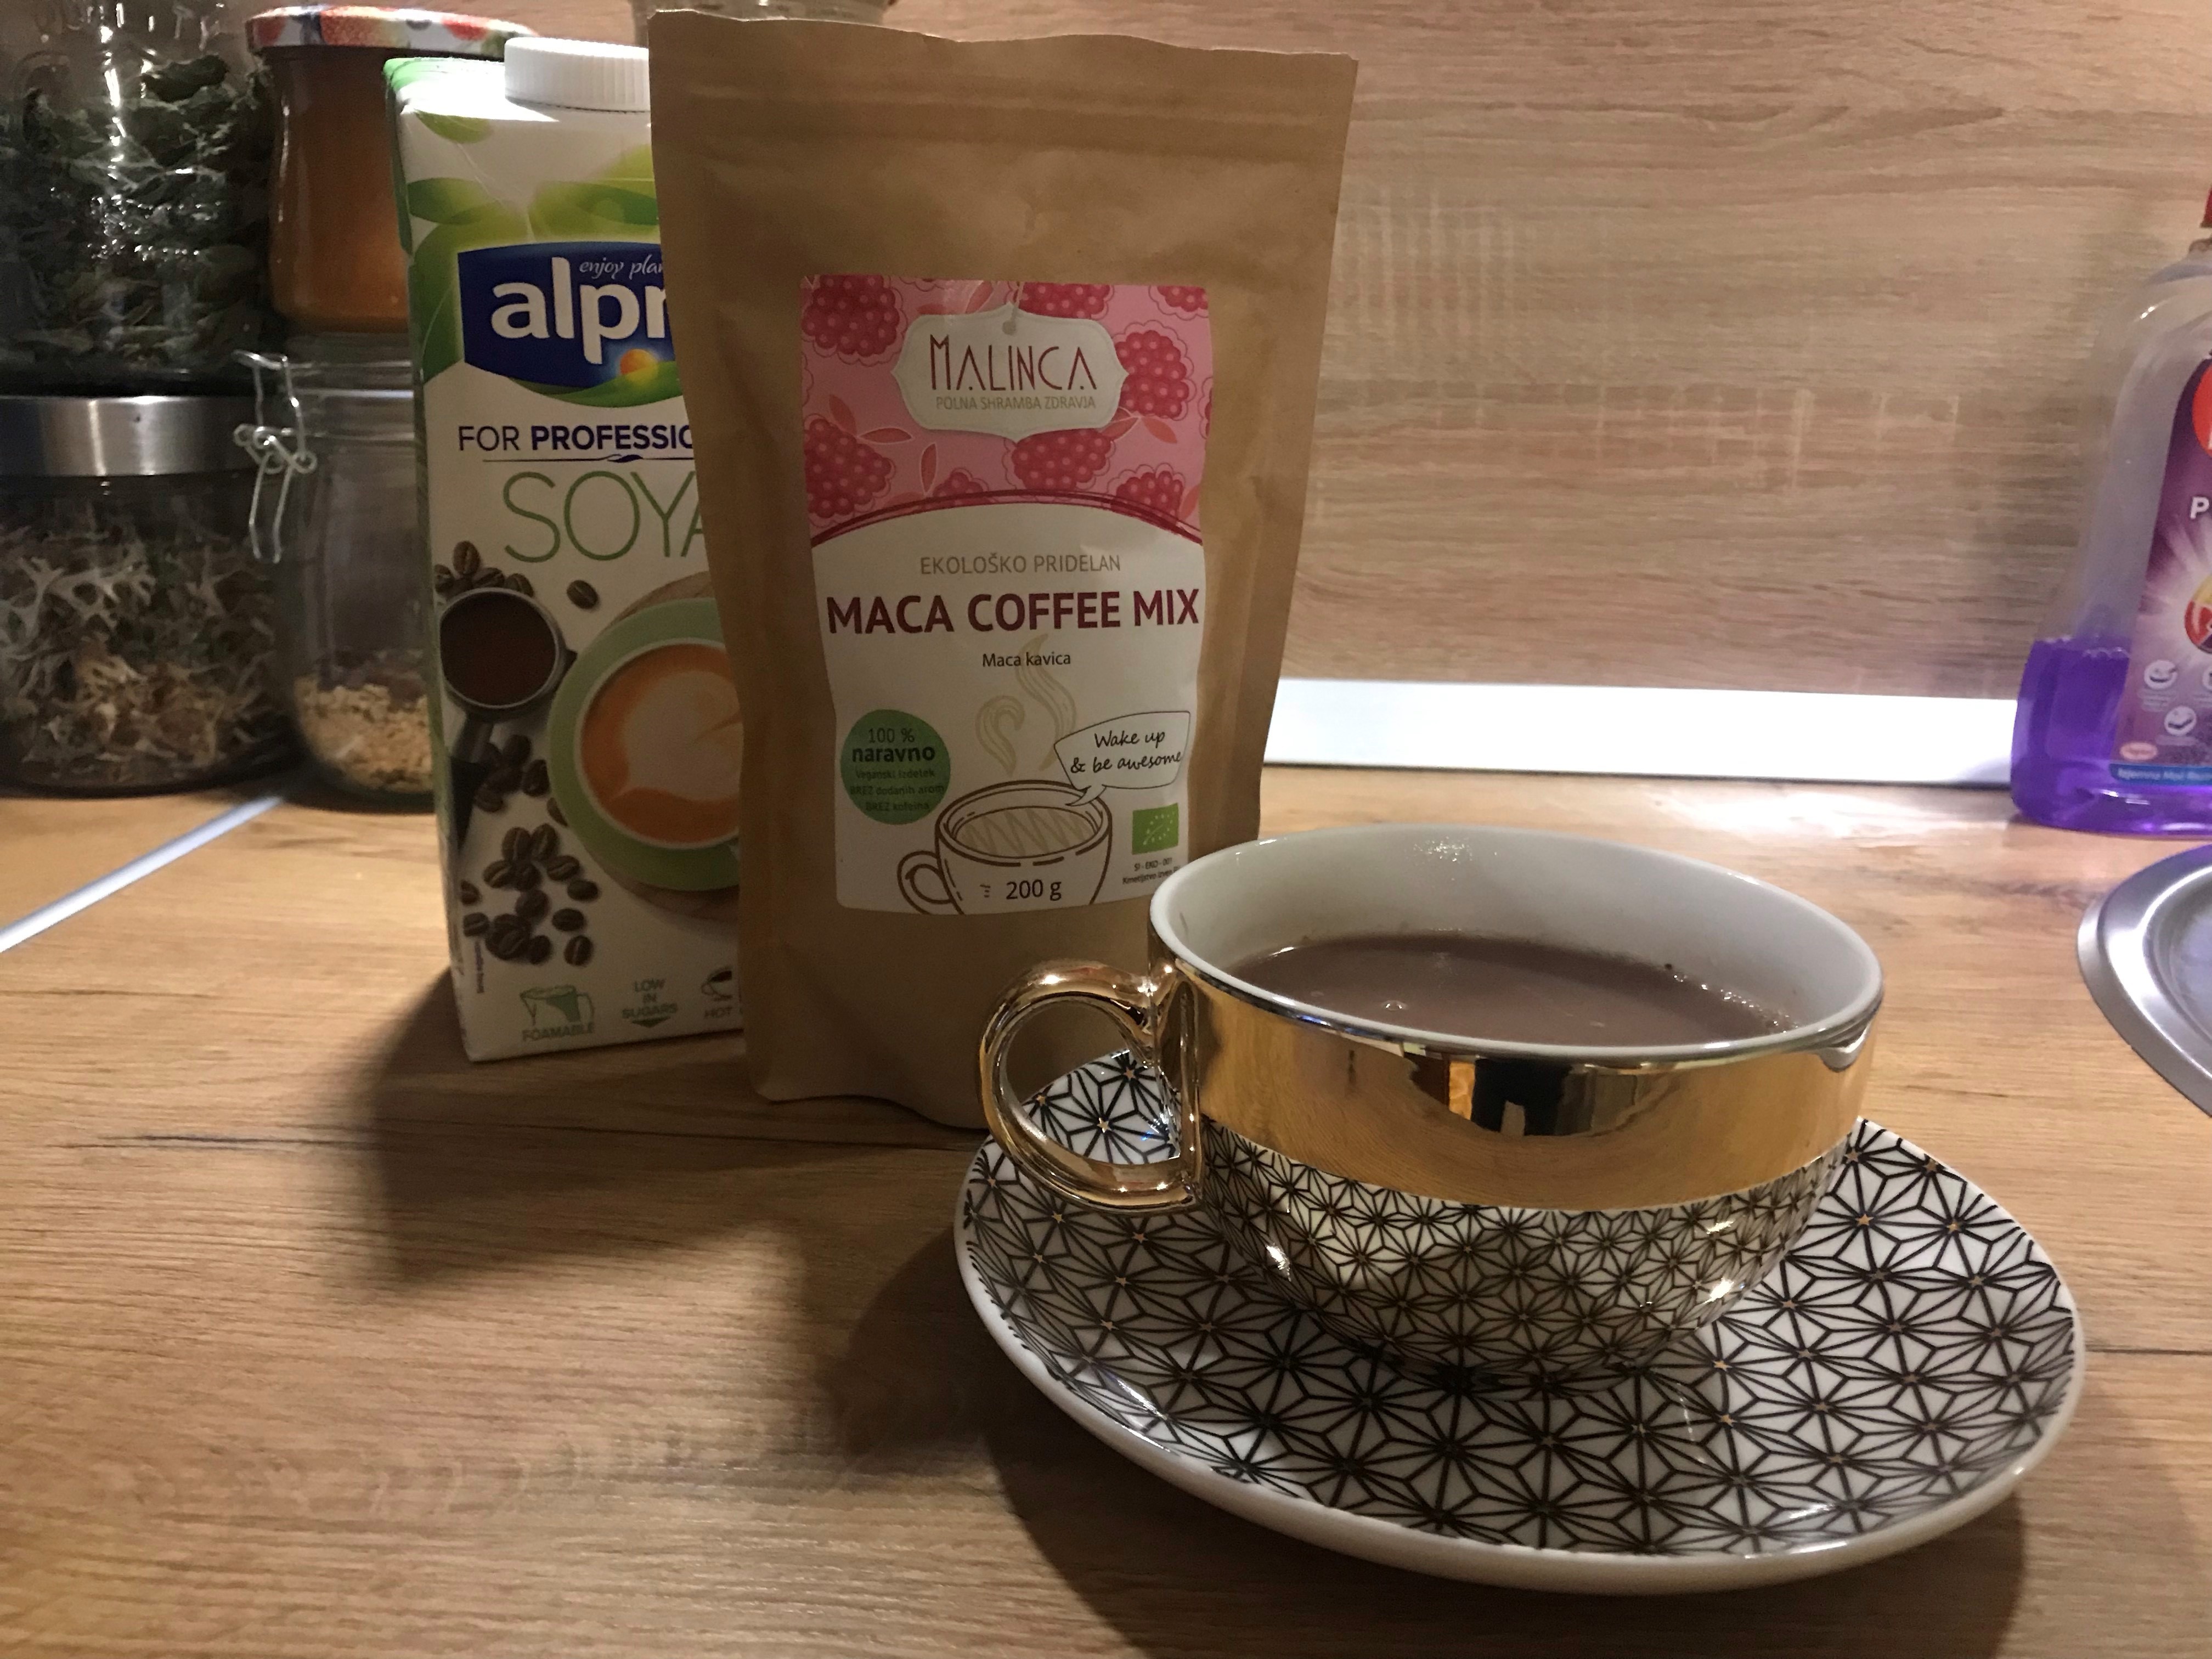 Maca coffee mix